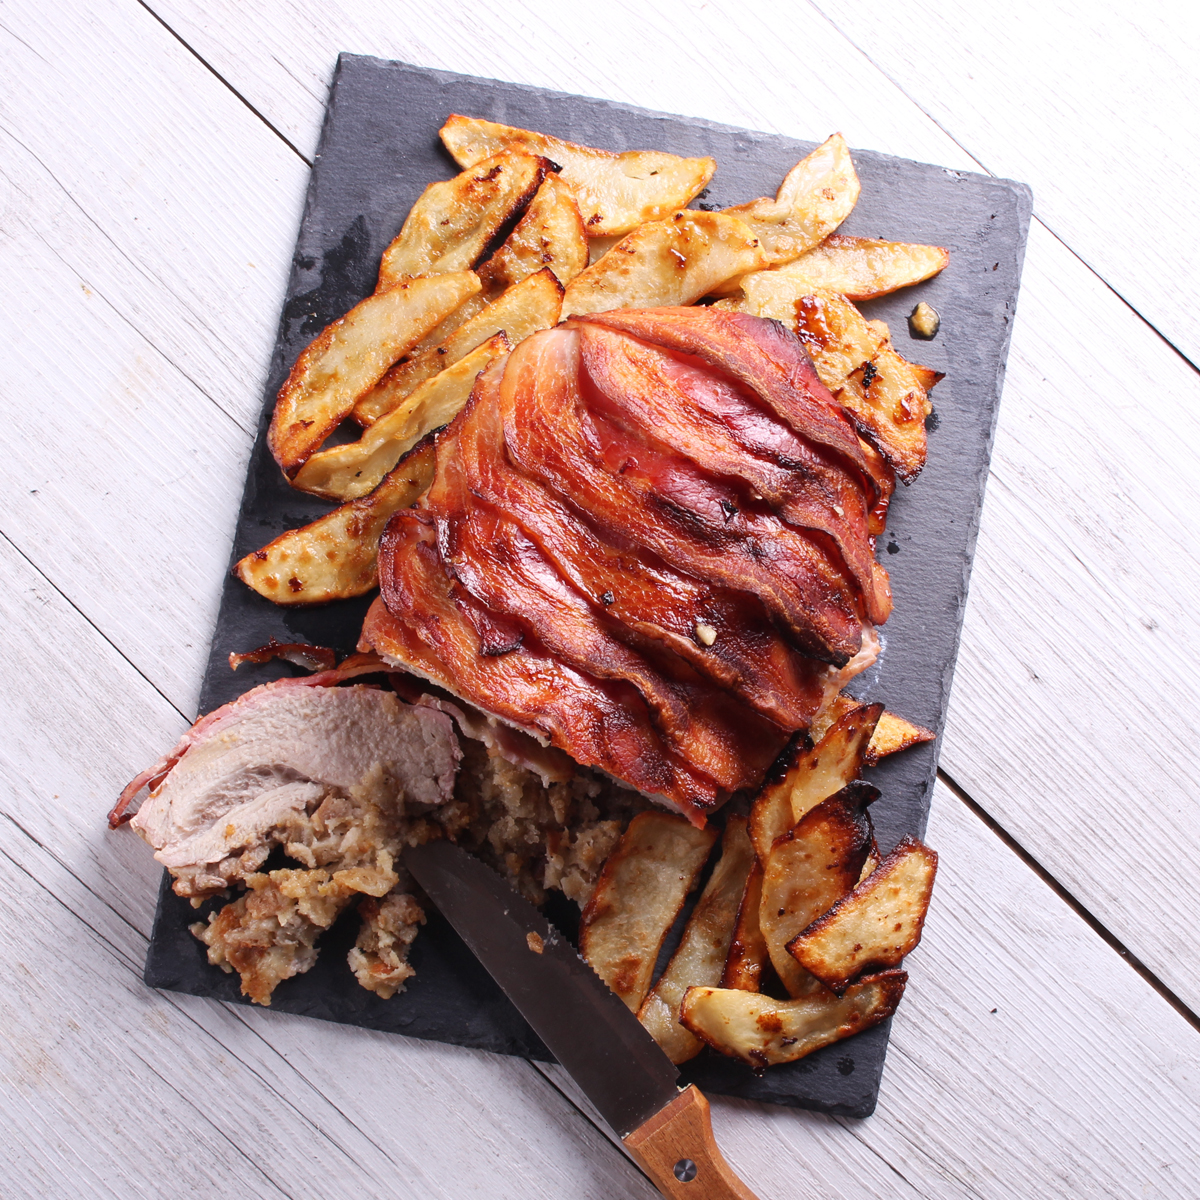 Blue Cheese stuffed pork and bacon roast - loin